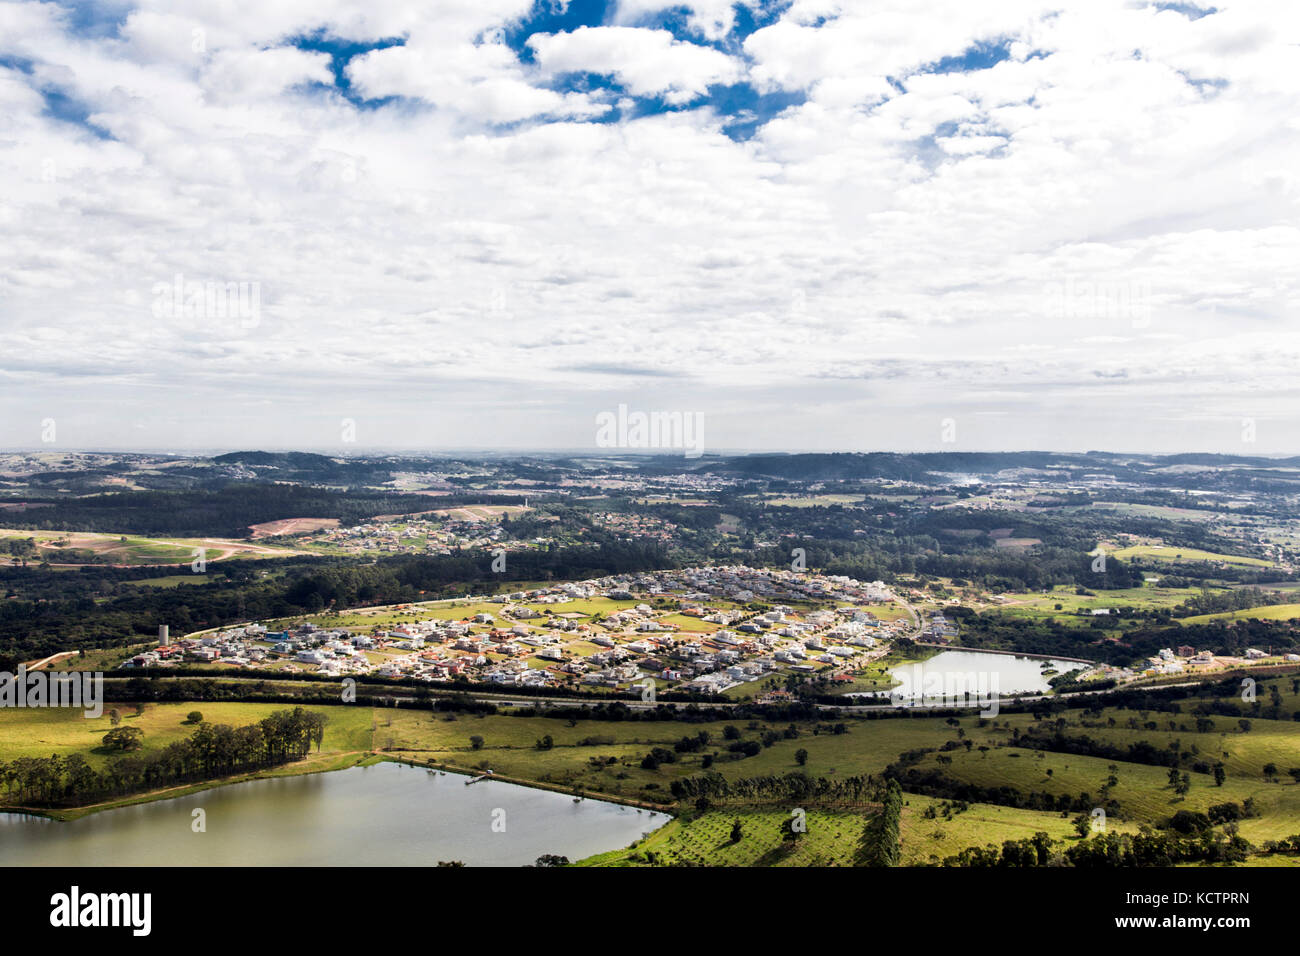 Aerial view of Jundiaí, city near São Paulo - Brazil. Houses and buildings. Reserva da Serra townhouse. Stock Photo